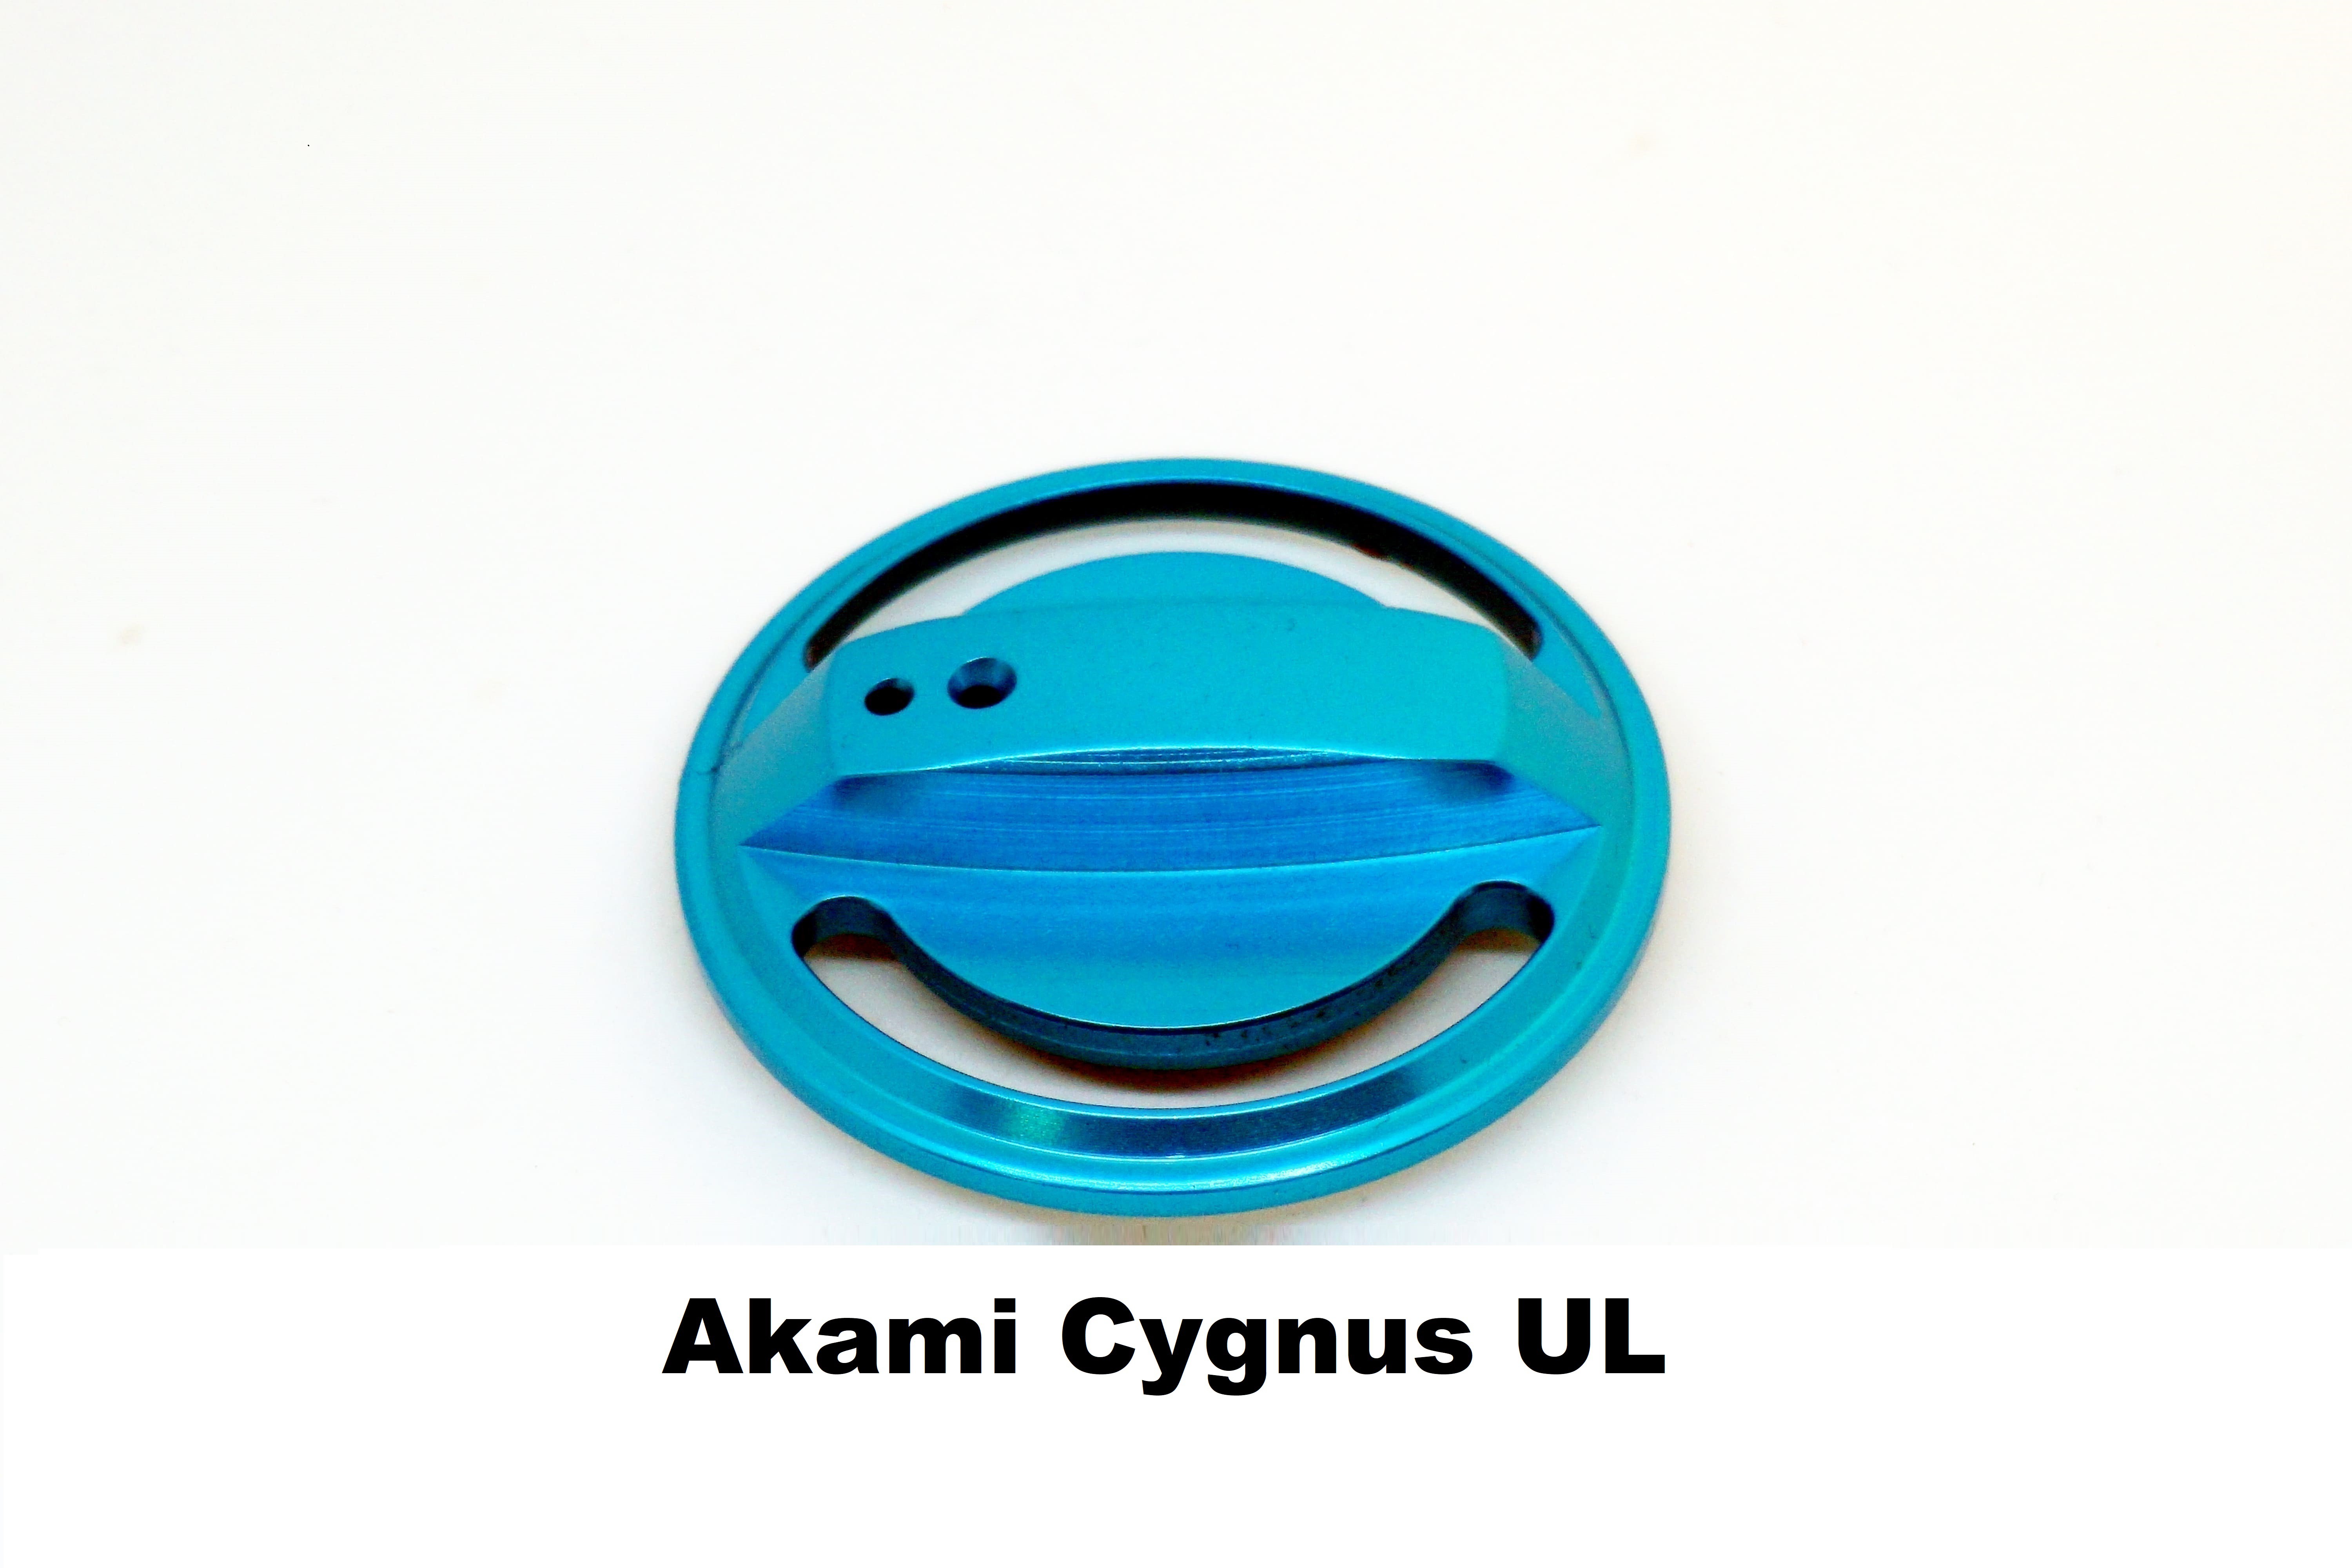 Bouchon de Fren Akami Cygnus UL